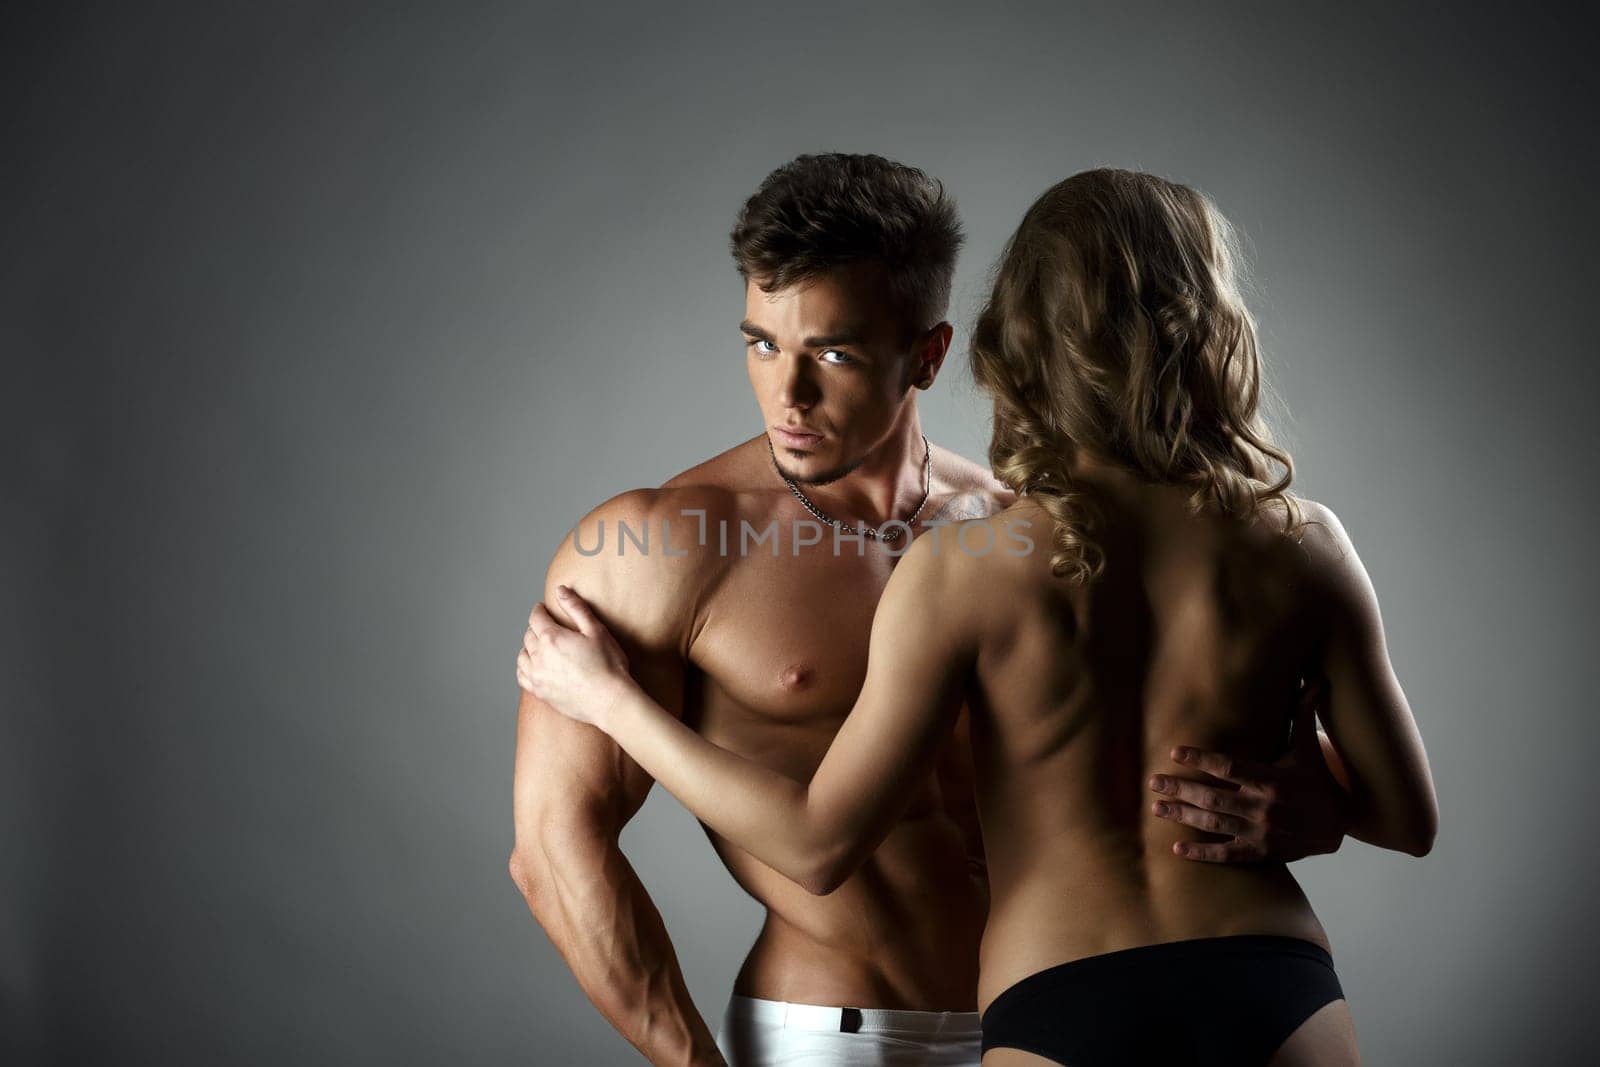 Studio photo of bodybuilder hugs topless model, on gray background